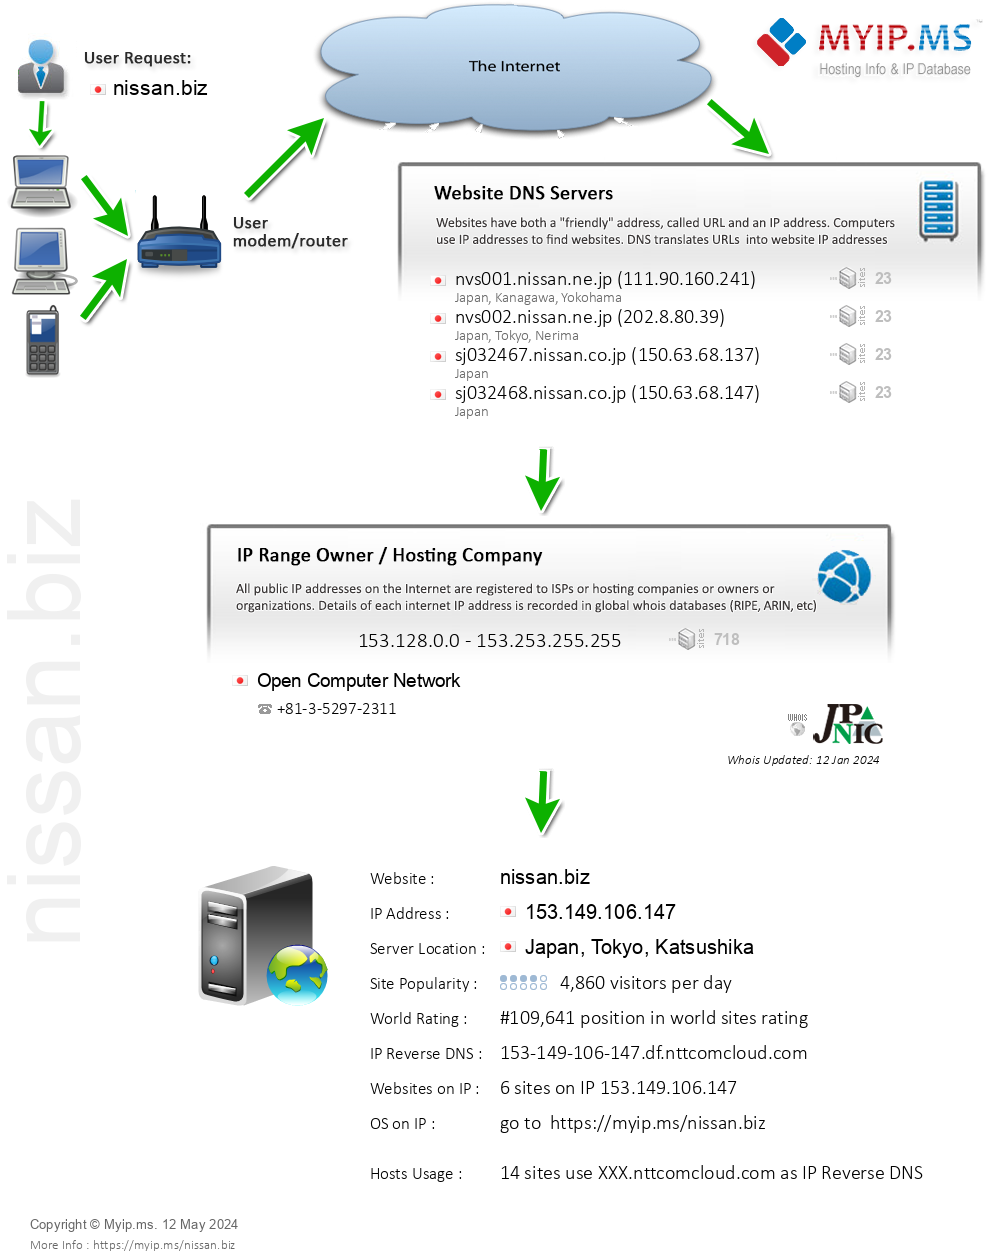 Nissan.biz - Website Hosting Visual IP Diagram